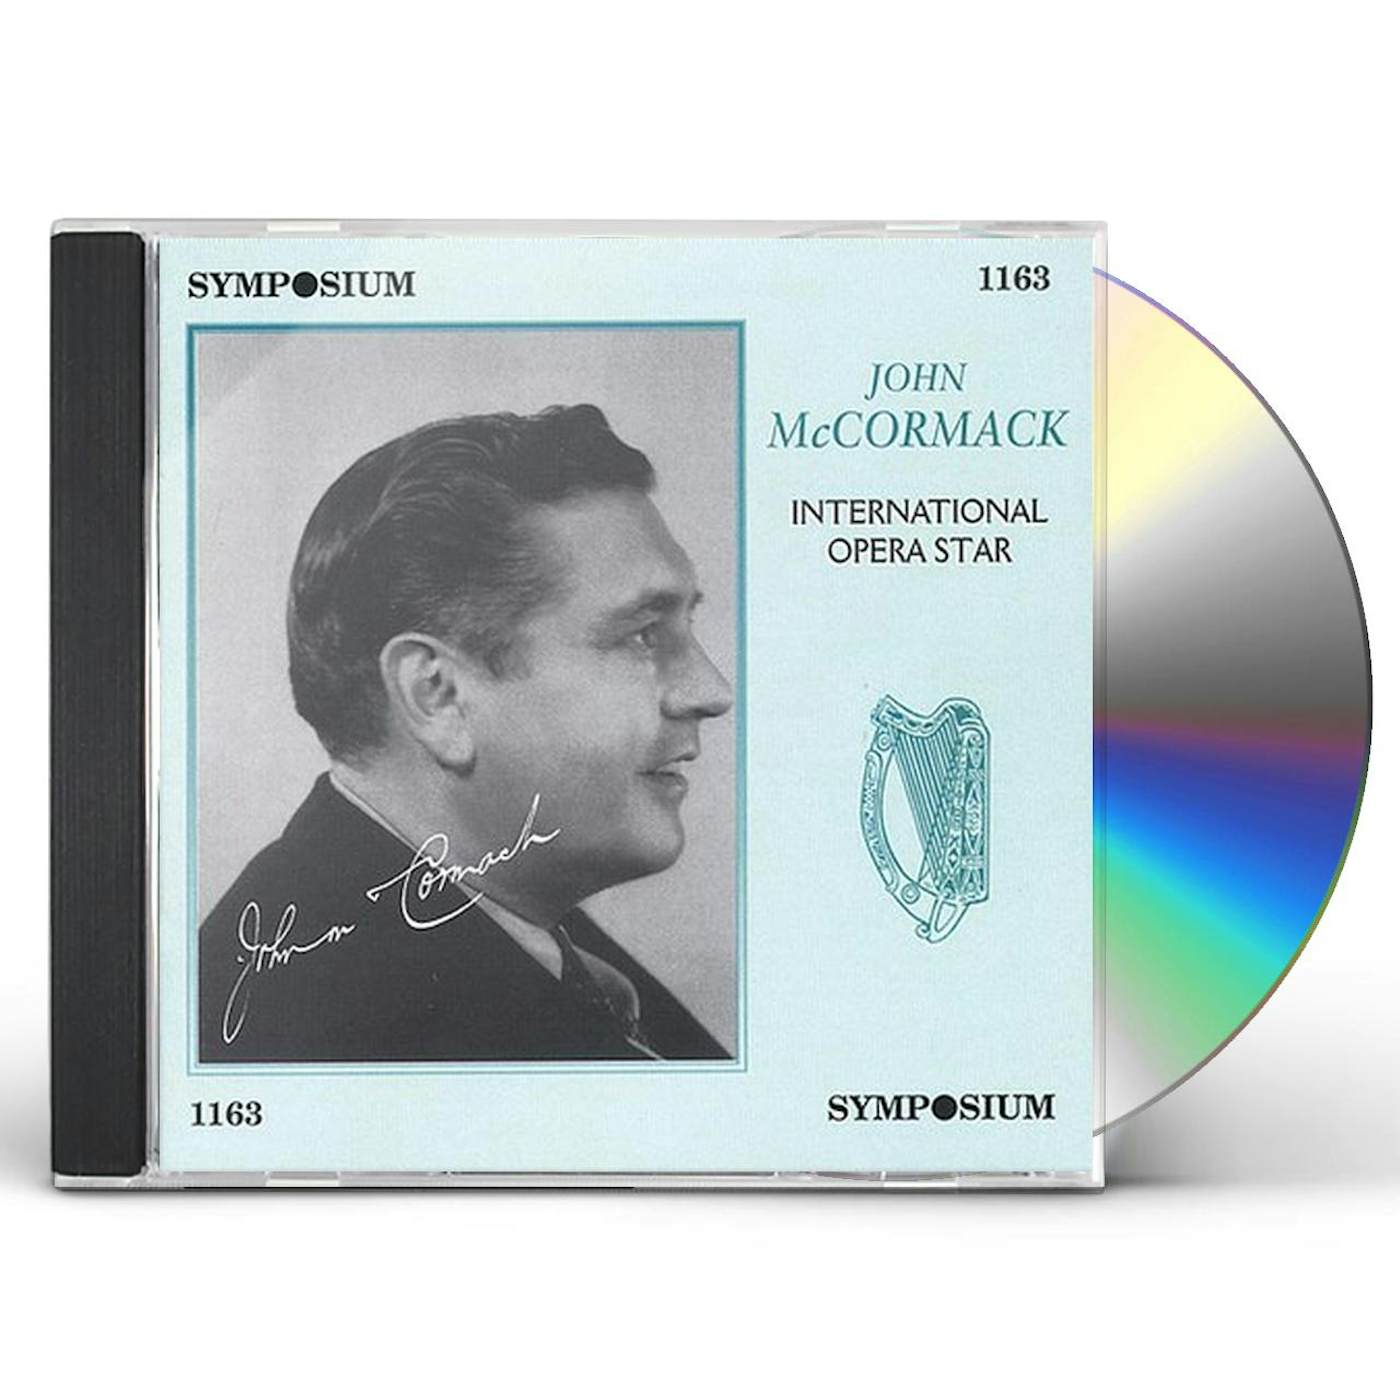 John McCormack SINGS 21 OPERATIC SELECTIONS CD